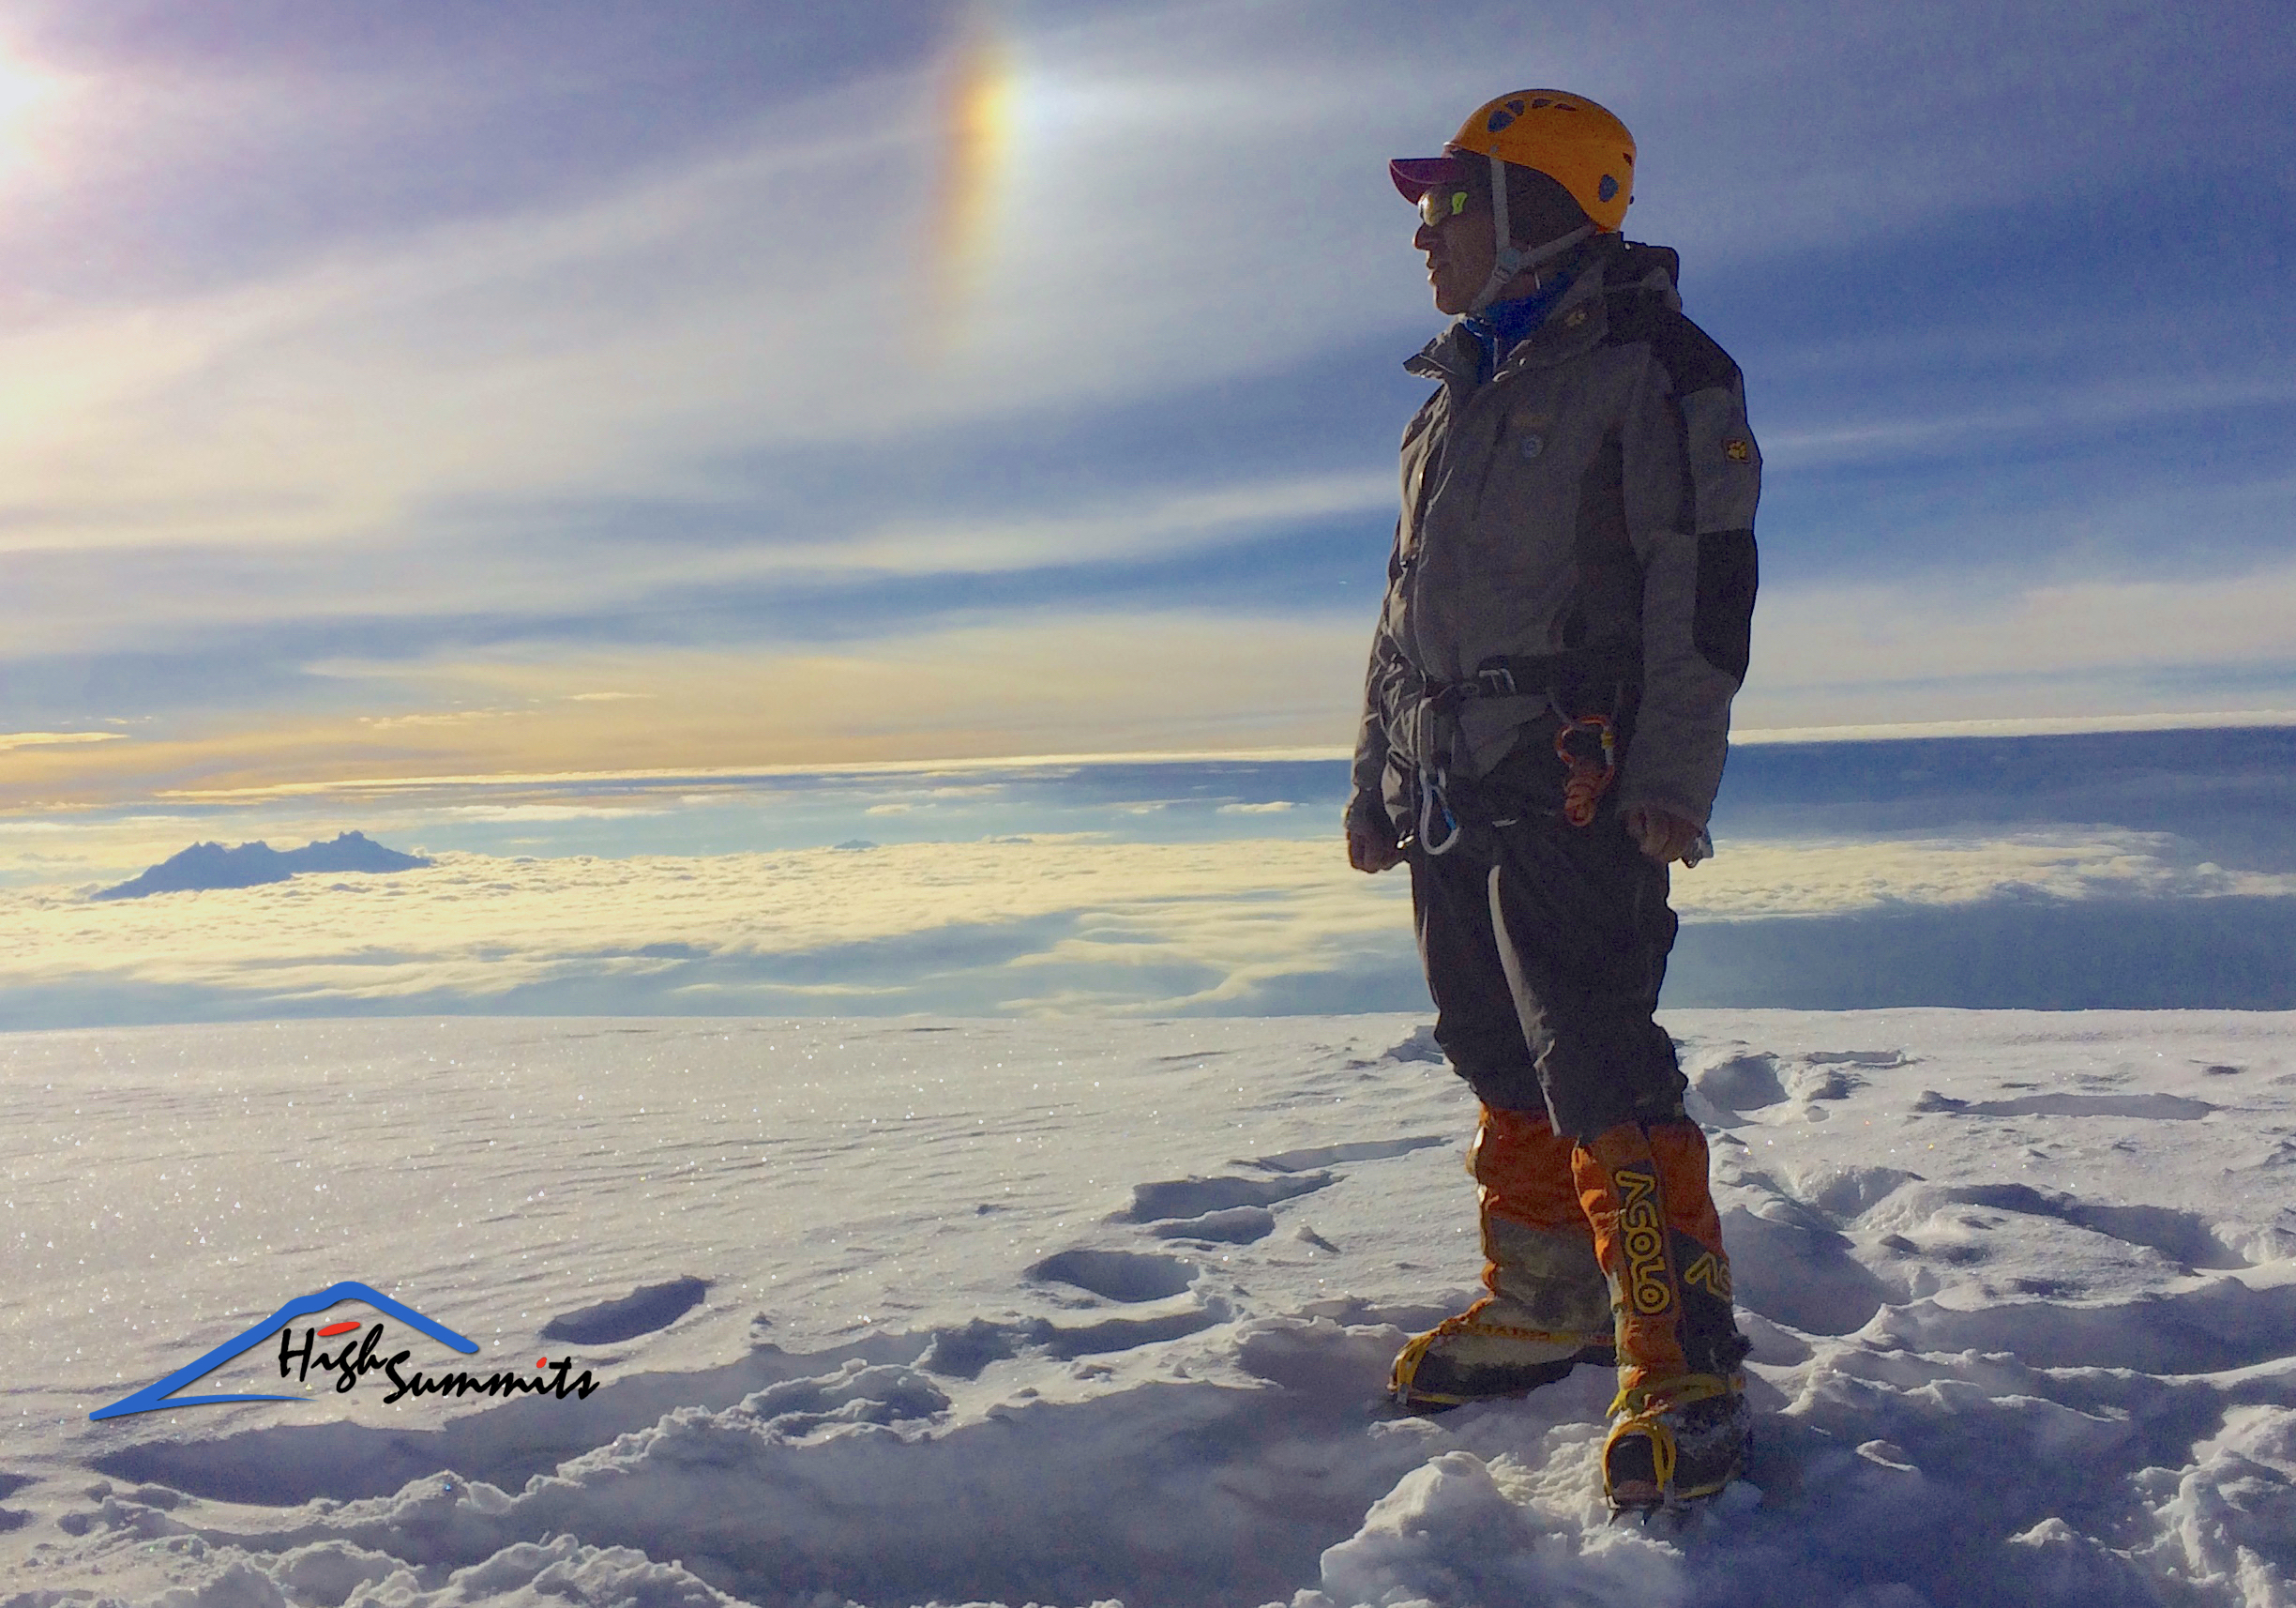 Summit Chimborazo, Abraham Chuquimarca mountain guide ASEGUIM/IFMGA